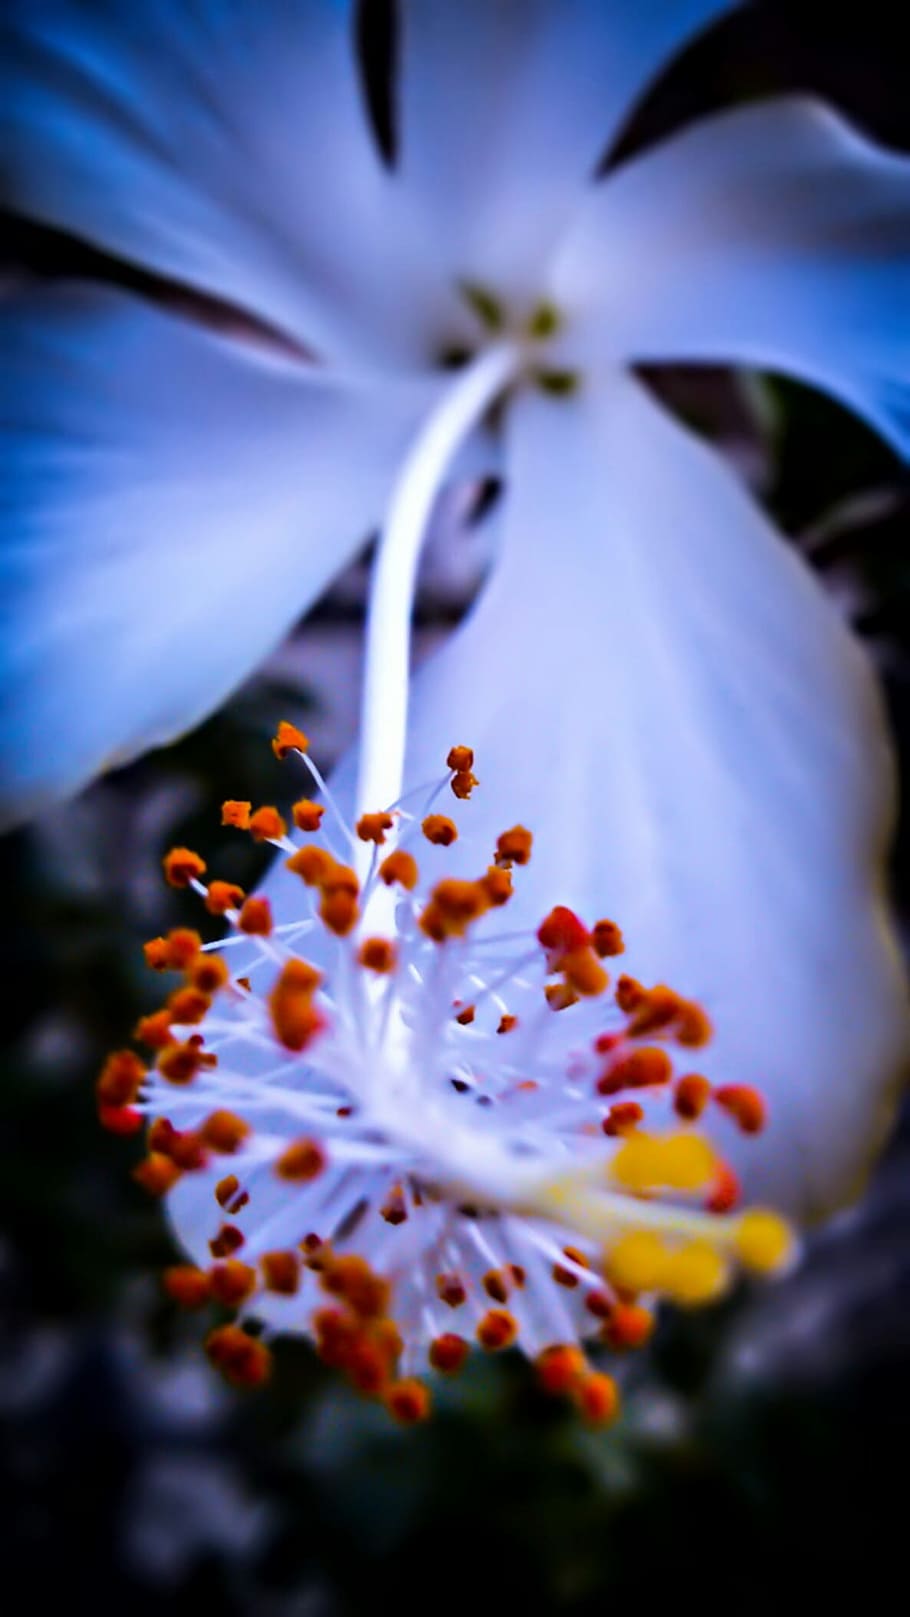 HD wallpaper: White Hibiscus Flower in Macro Shot Photography ...